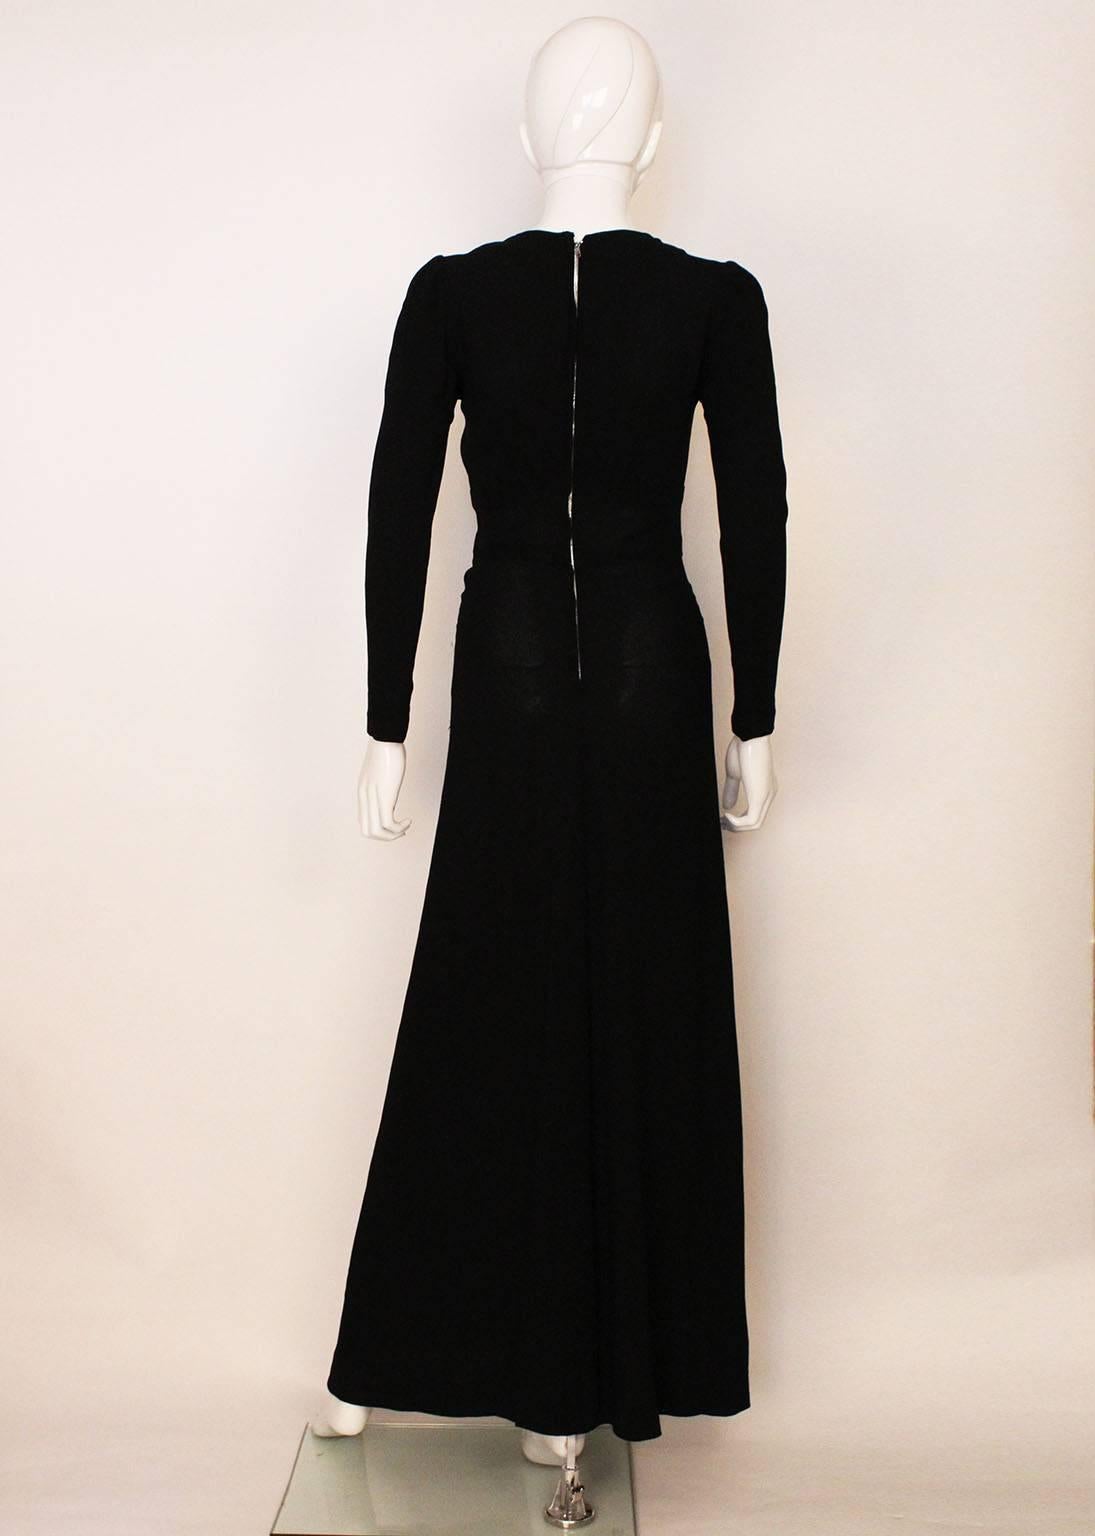 Women's Vintage 1970s Ossie Clark Black Moss Crepe Maxi Dress